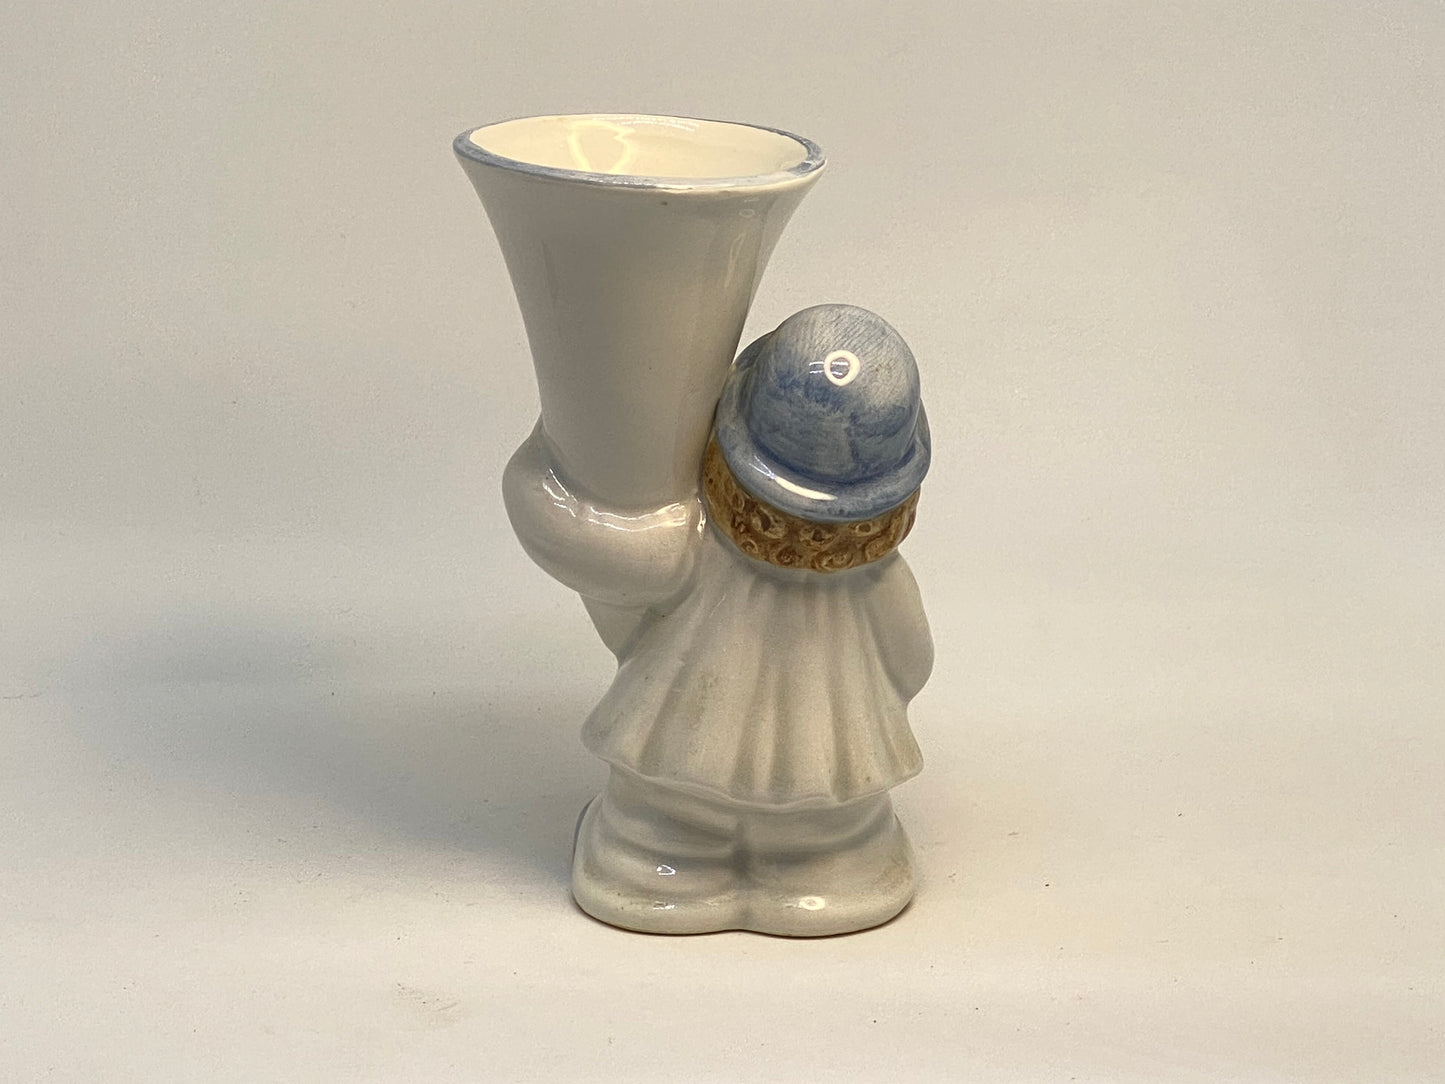 Fitz & Floyd ceramic clown bud vase - 1979